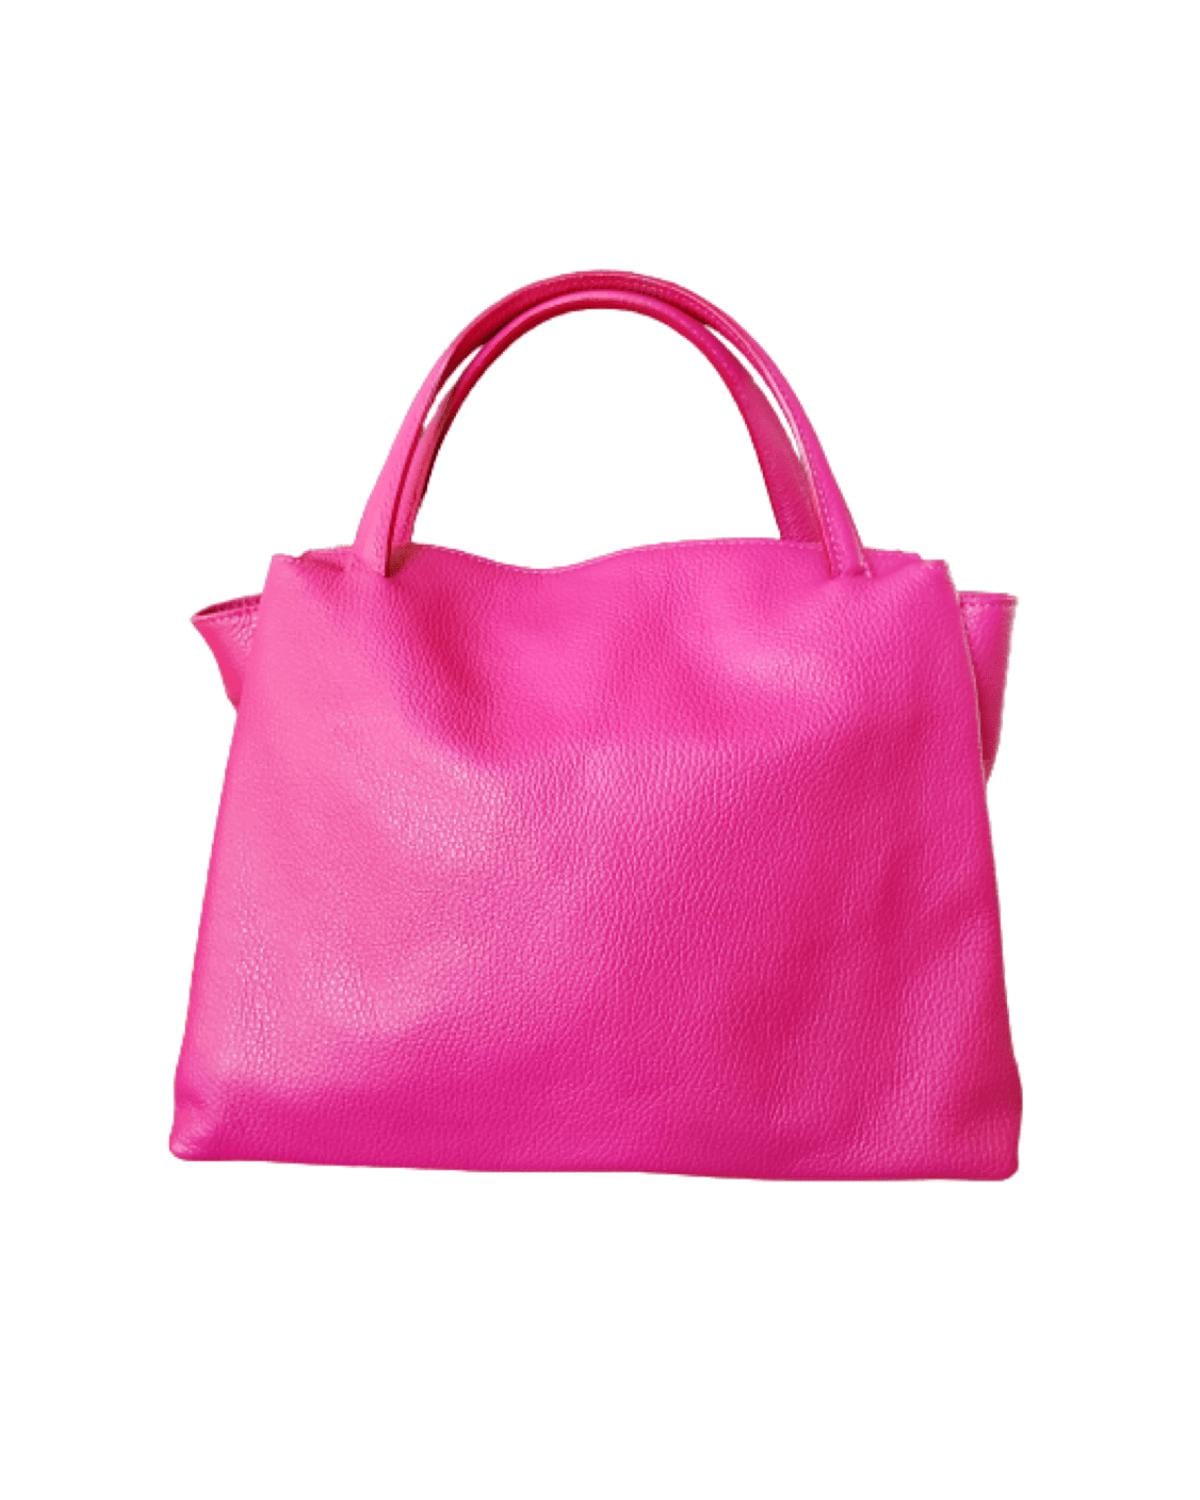 HHB Handbags Celeste Italian Leather Handbag